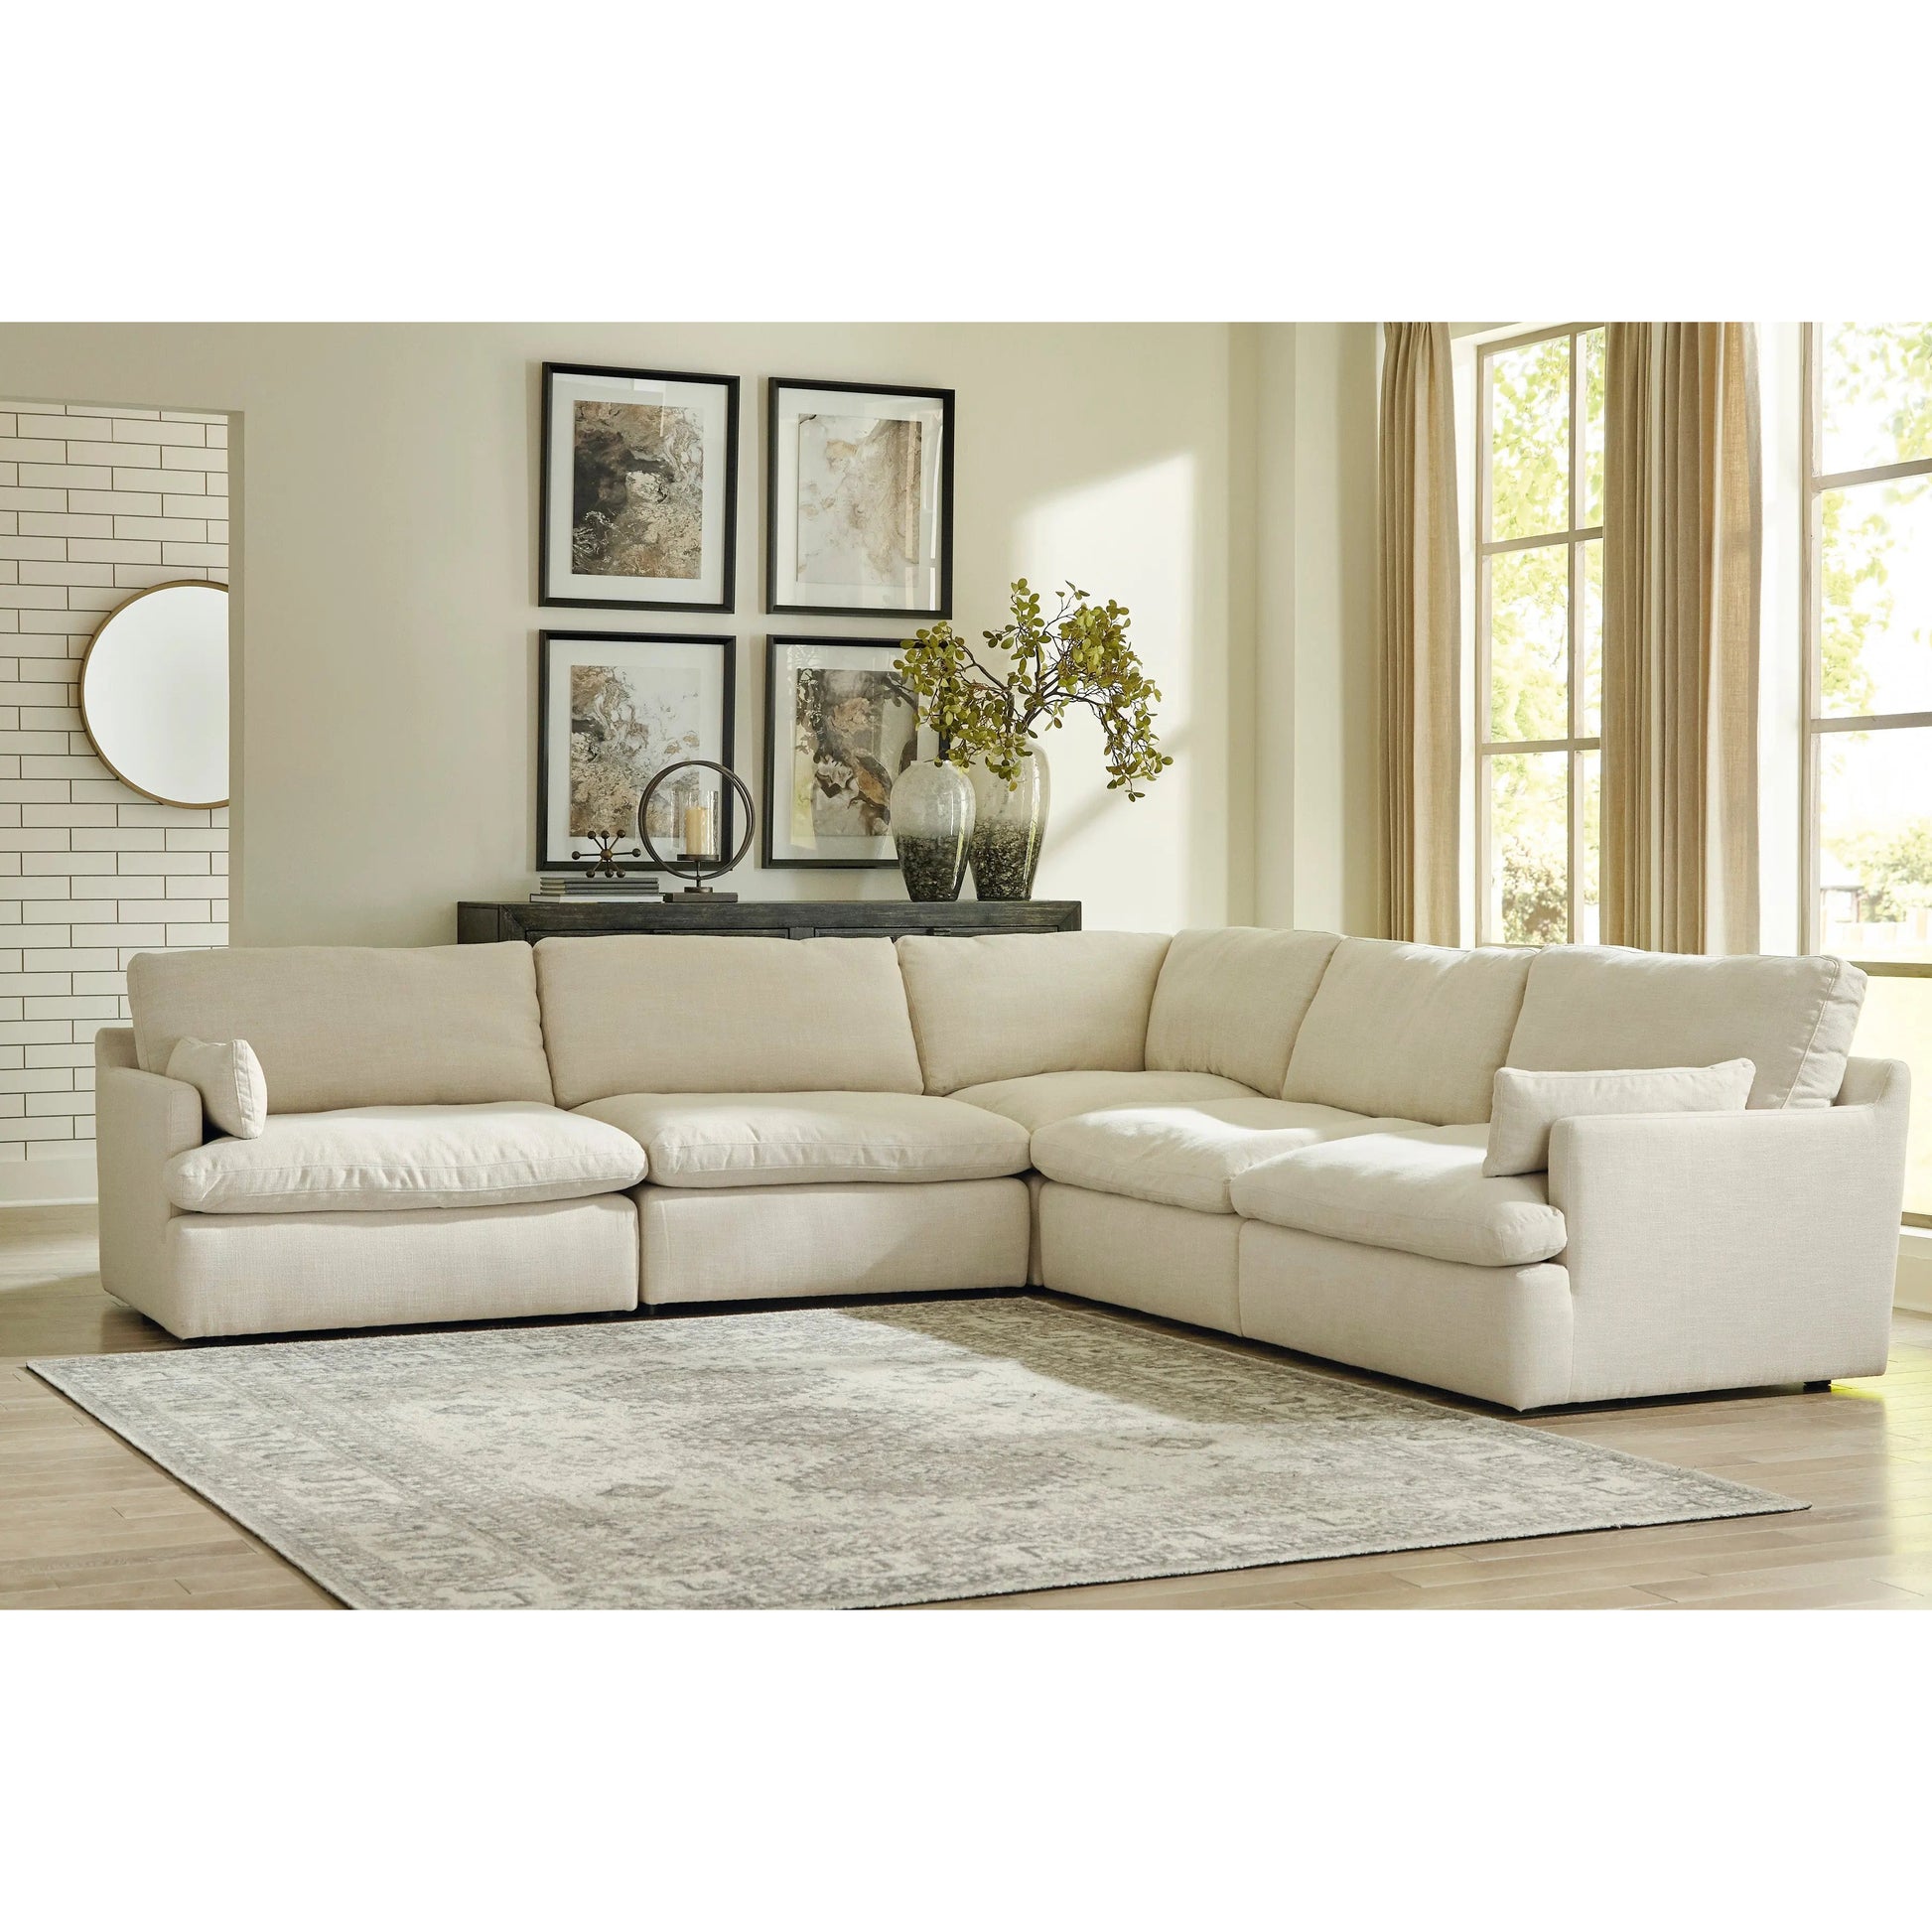 Tanavi - Corner Lounge Ashley Furniture HomeStore